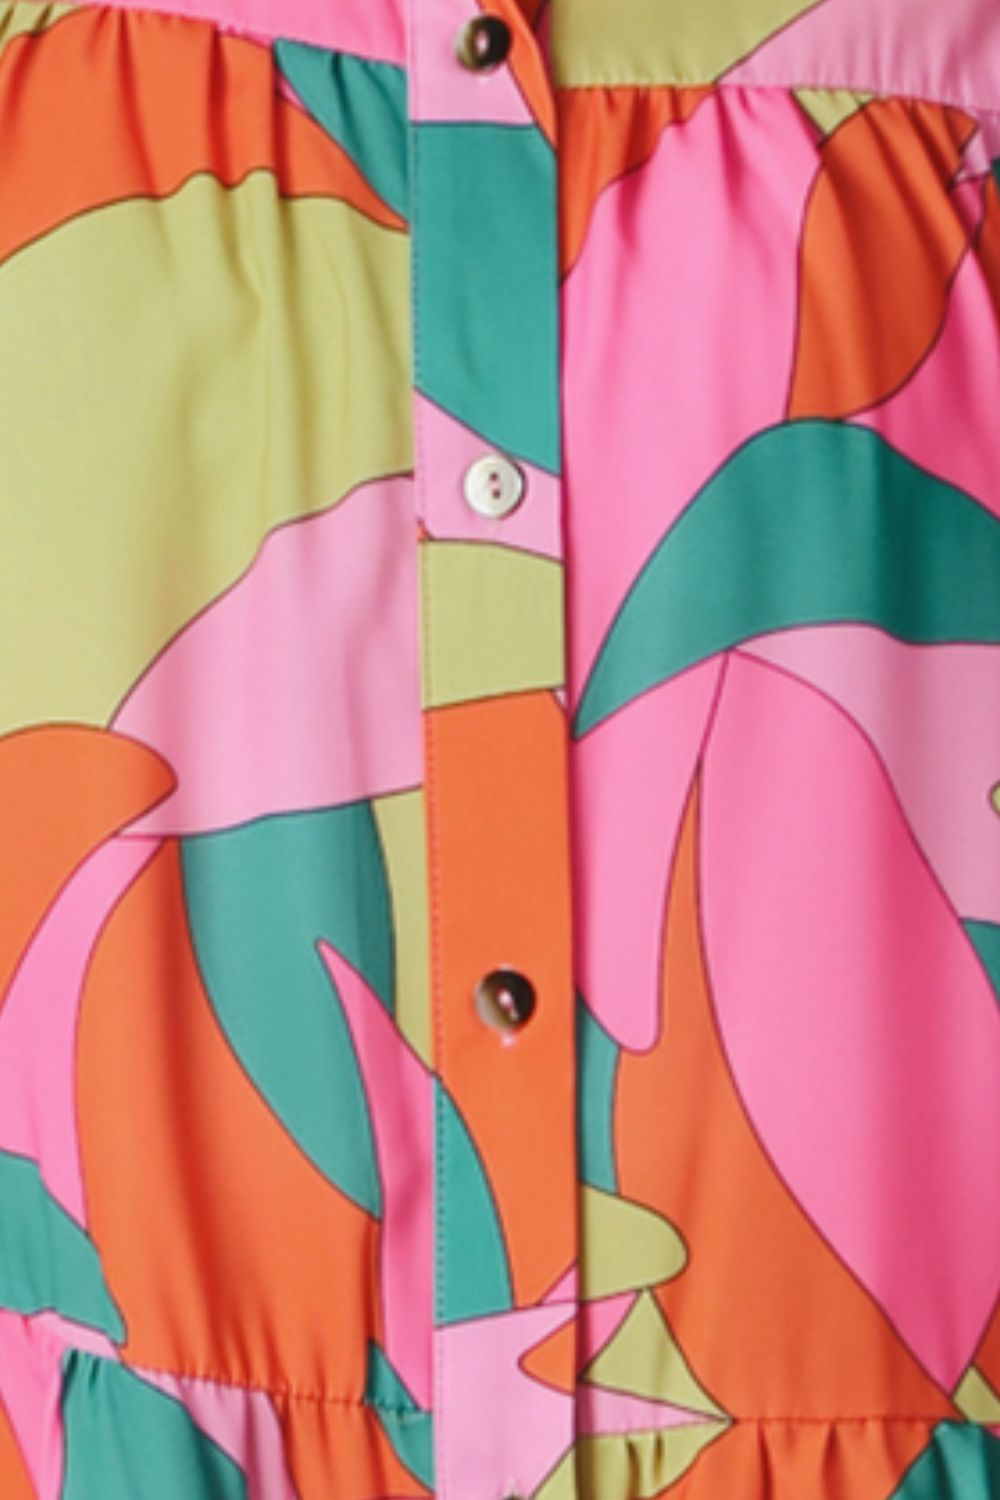 Multicolored Sleeveless Longline Shirt Print on any thing USA/STOD clothes